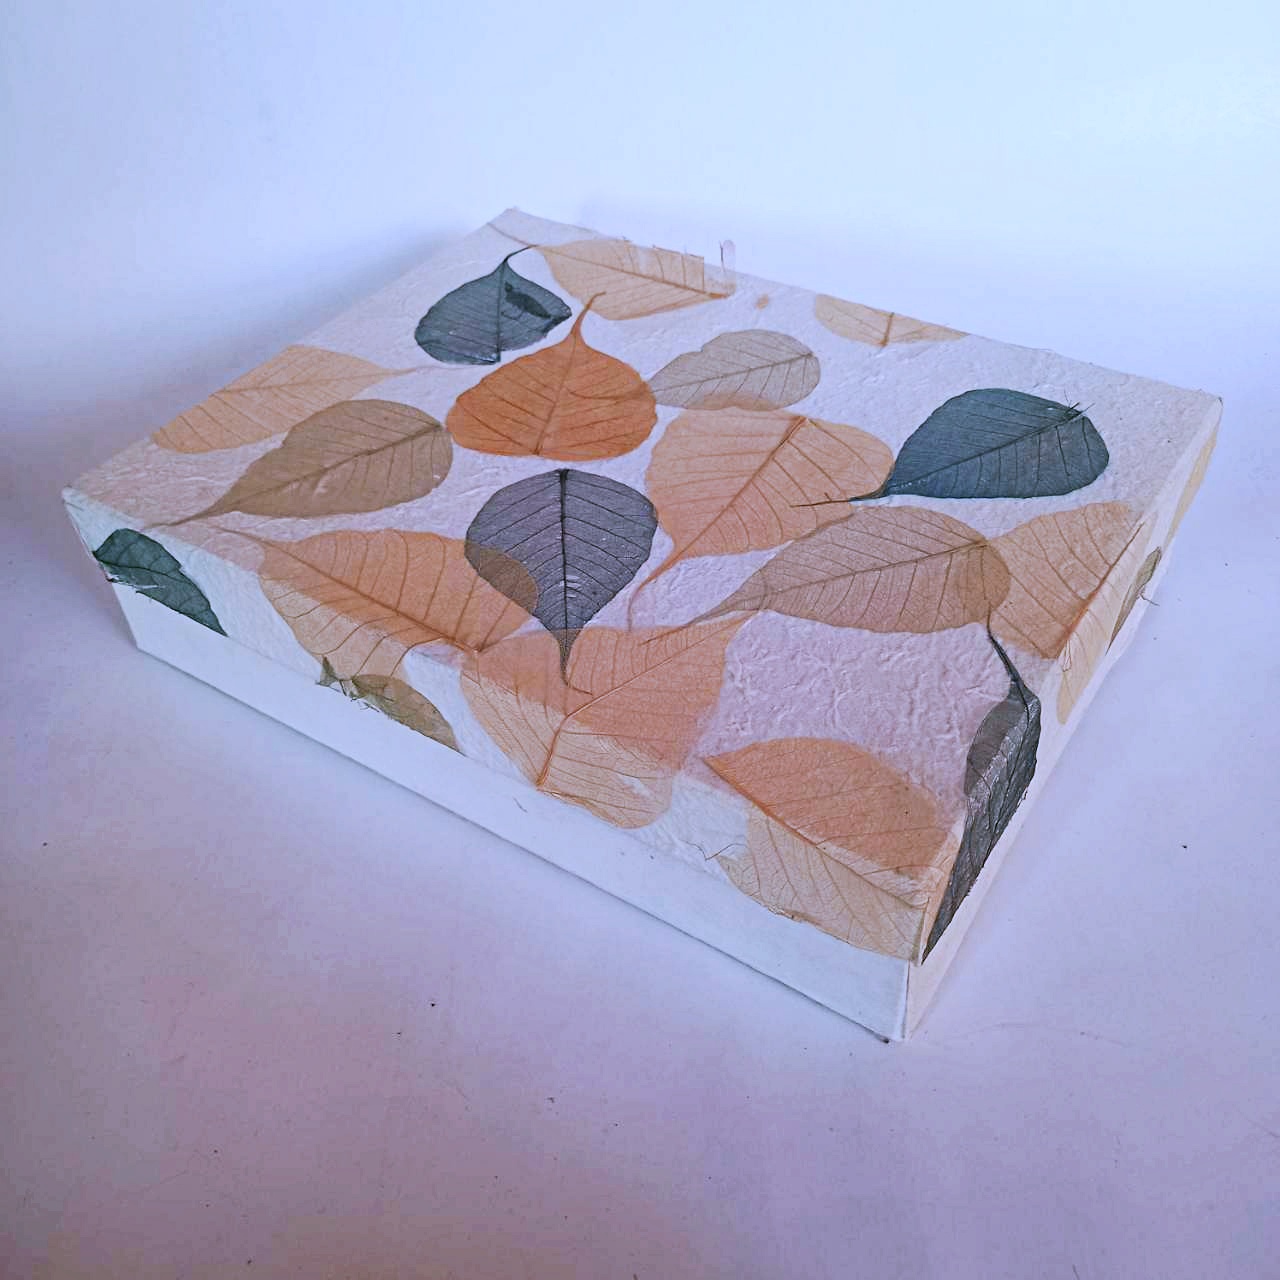 Mulberry paper box with bodhi leaves, กล่องกระดาษสาแต่งใบโพธิ์